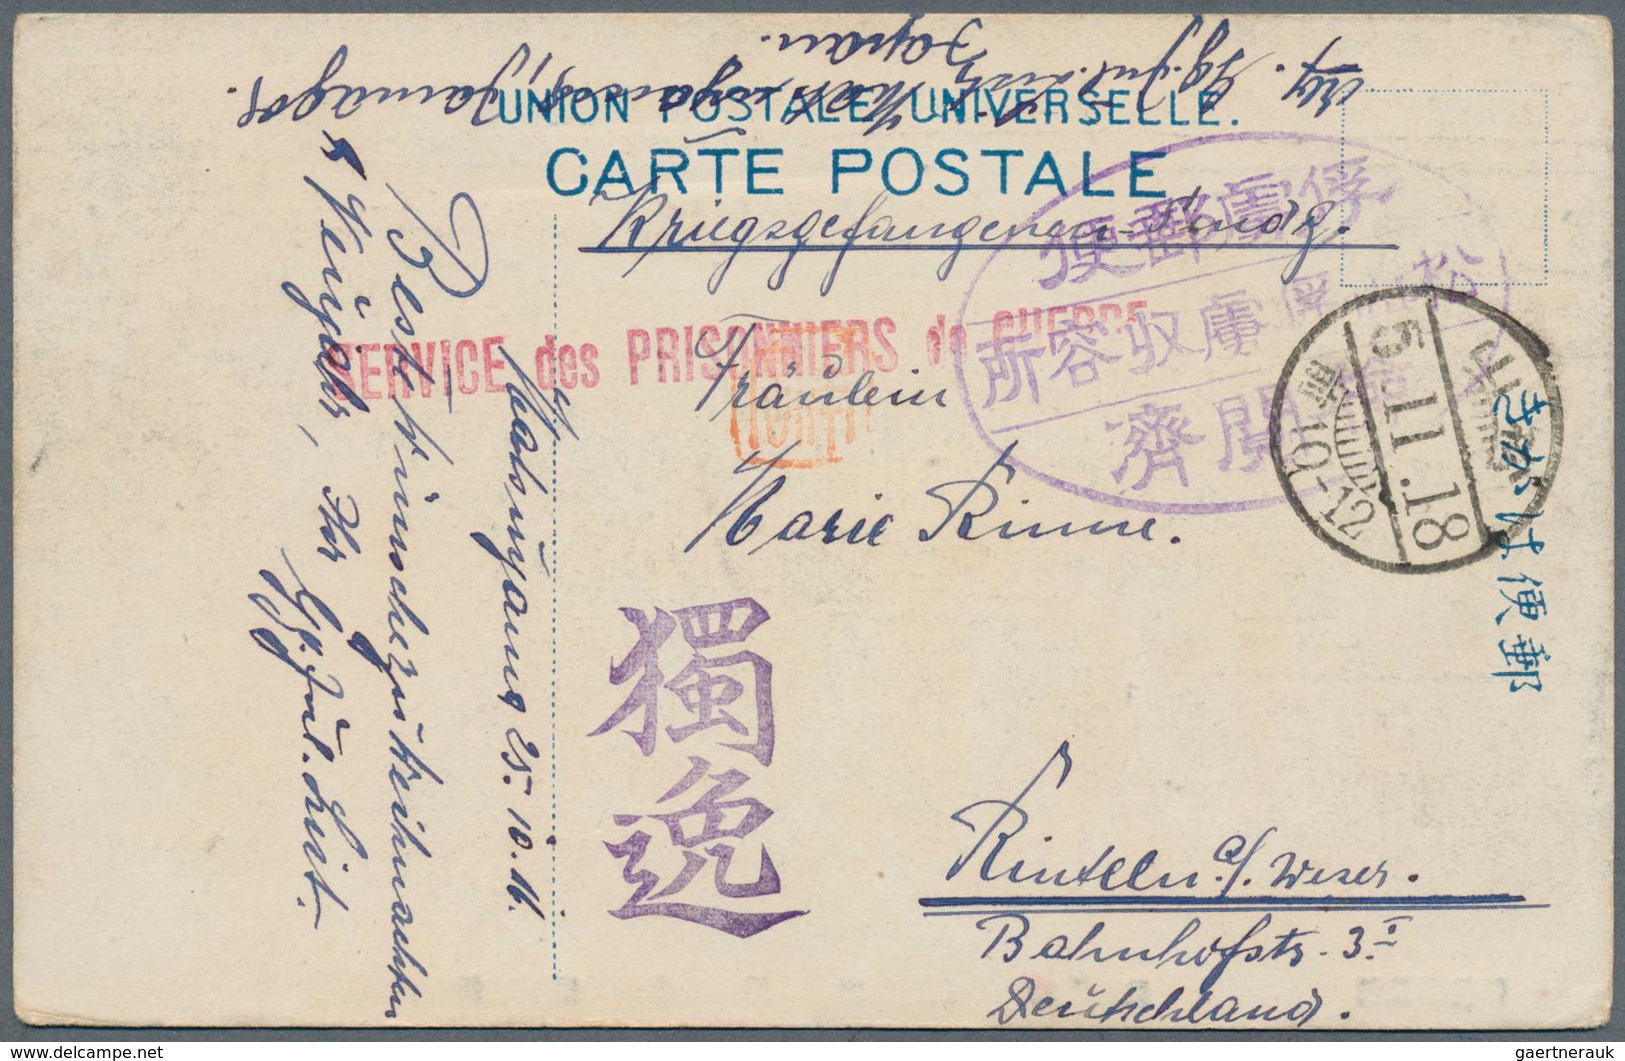 29478 Lagerpost Tsingtau: 1914/19, lot with propaganda "our blue boys in Tsingtau" (german), "he has fores